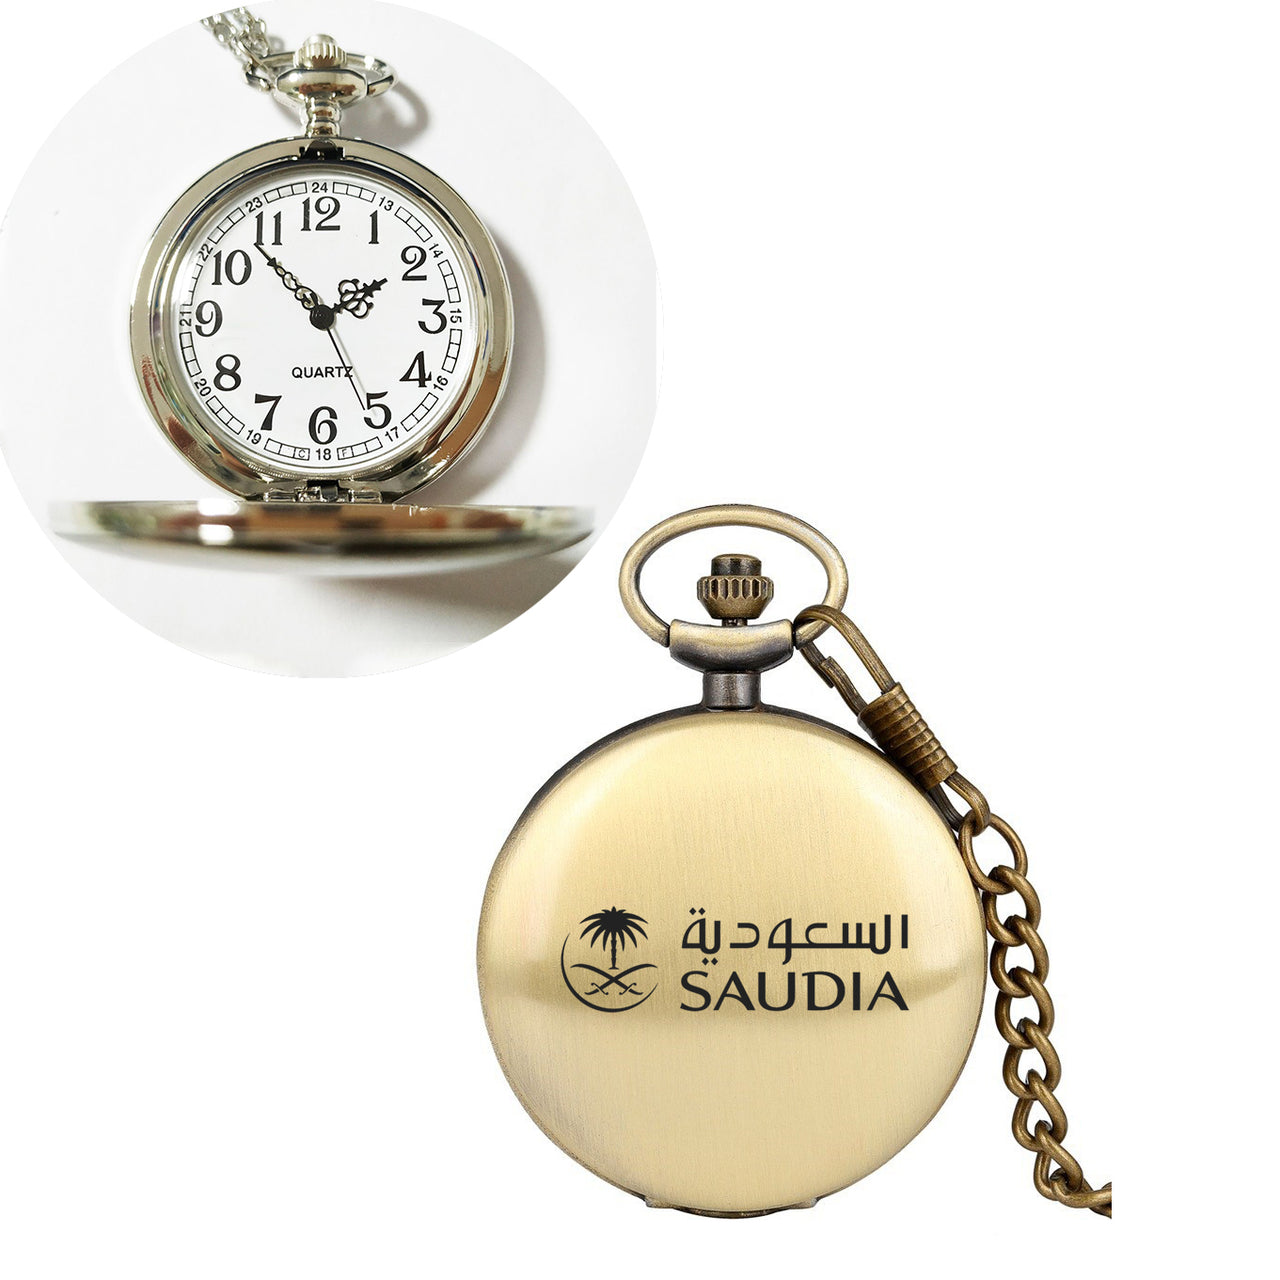 Saudi Arabian Airlines Designed Pocket Watches